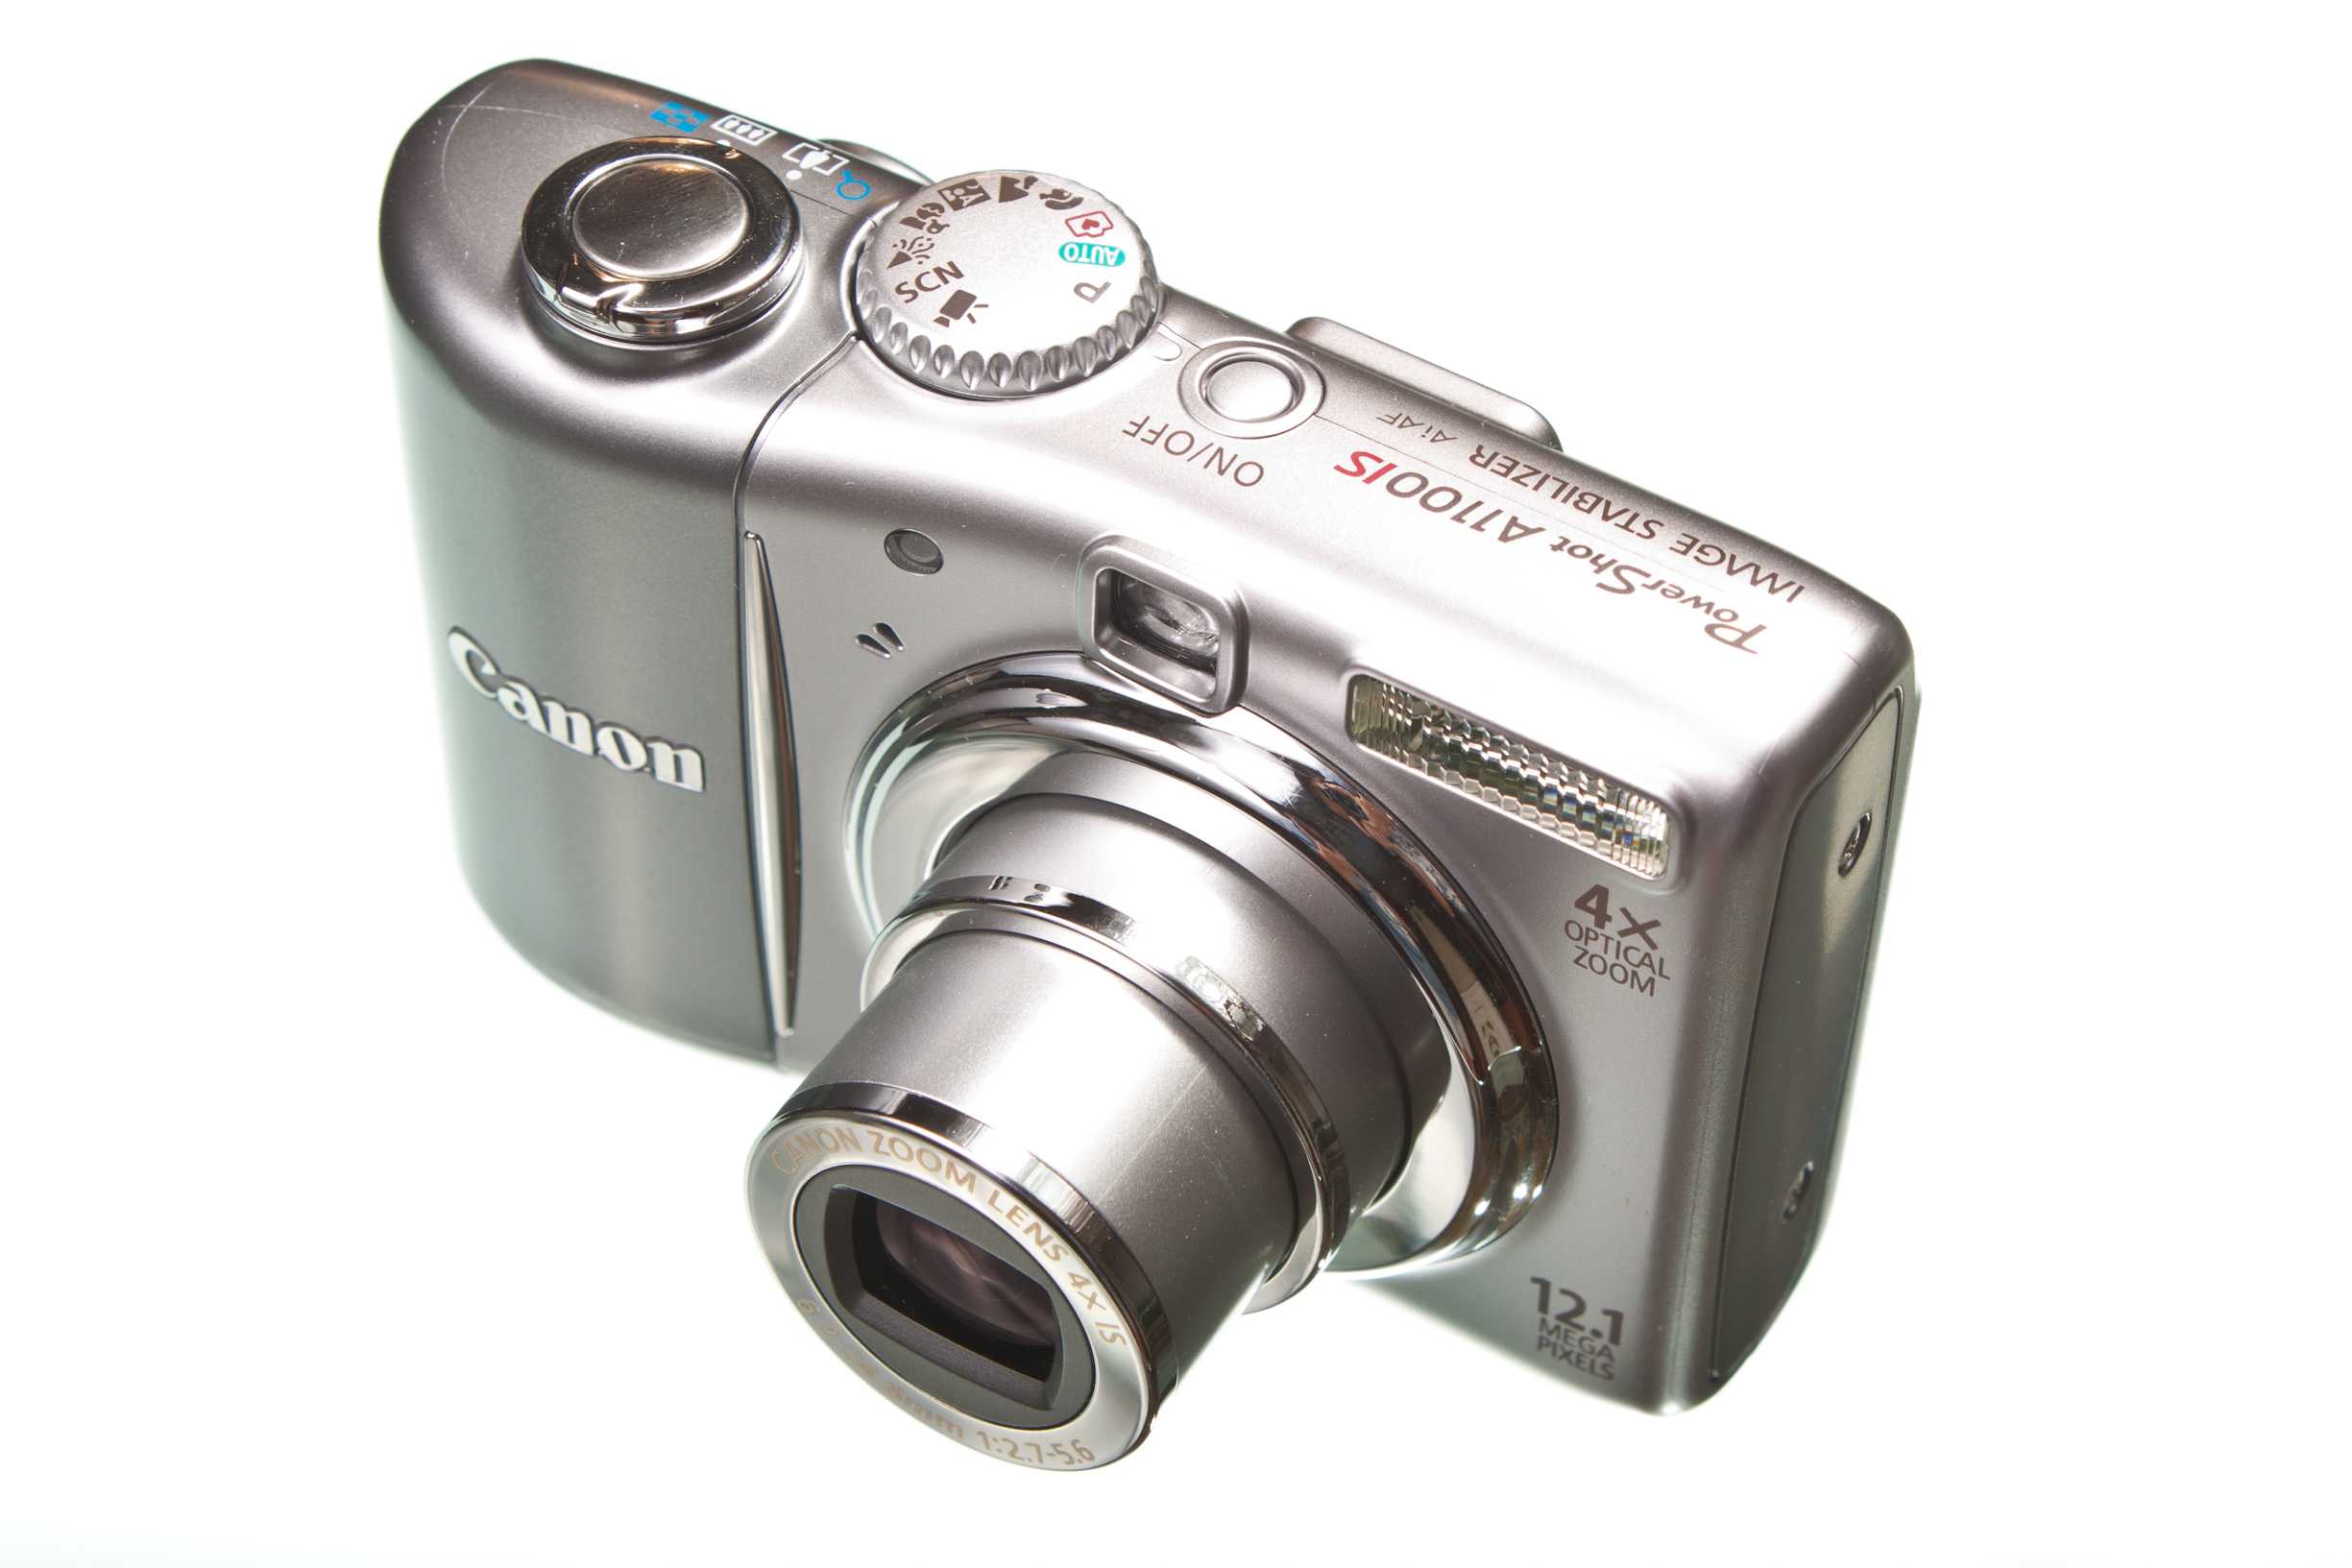 Фотоаппарат canon powershot sx120 is balck — купить, цена и характеристики, отзывы